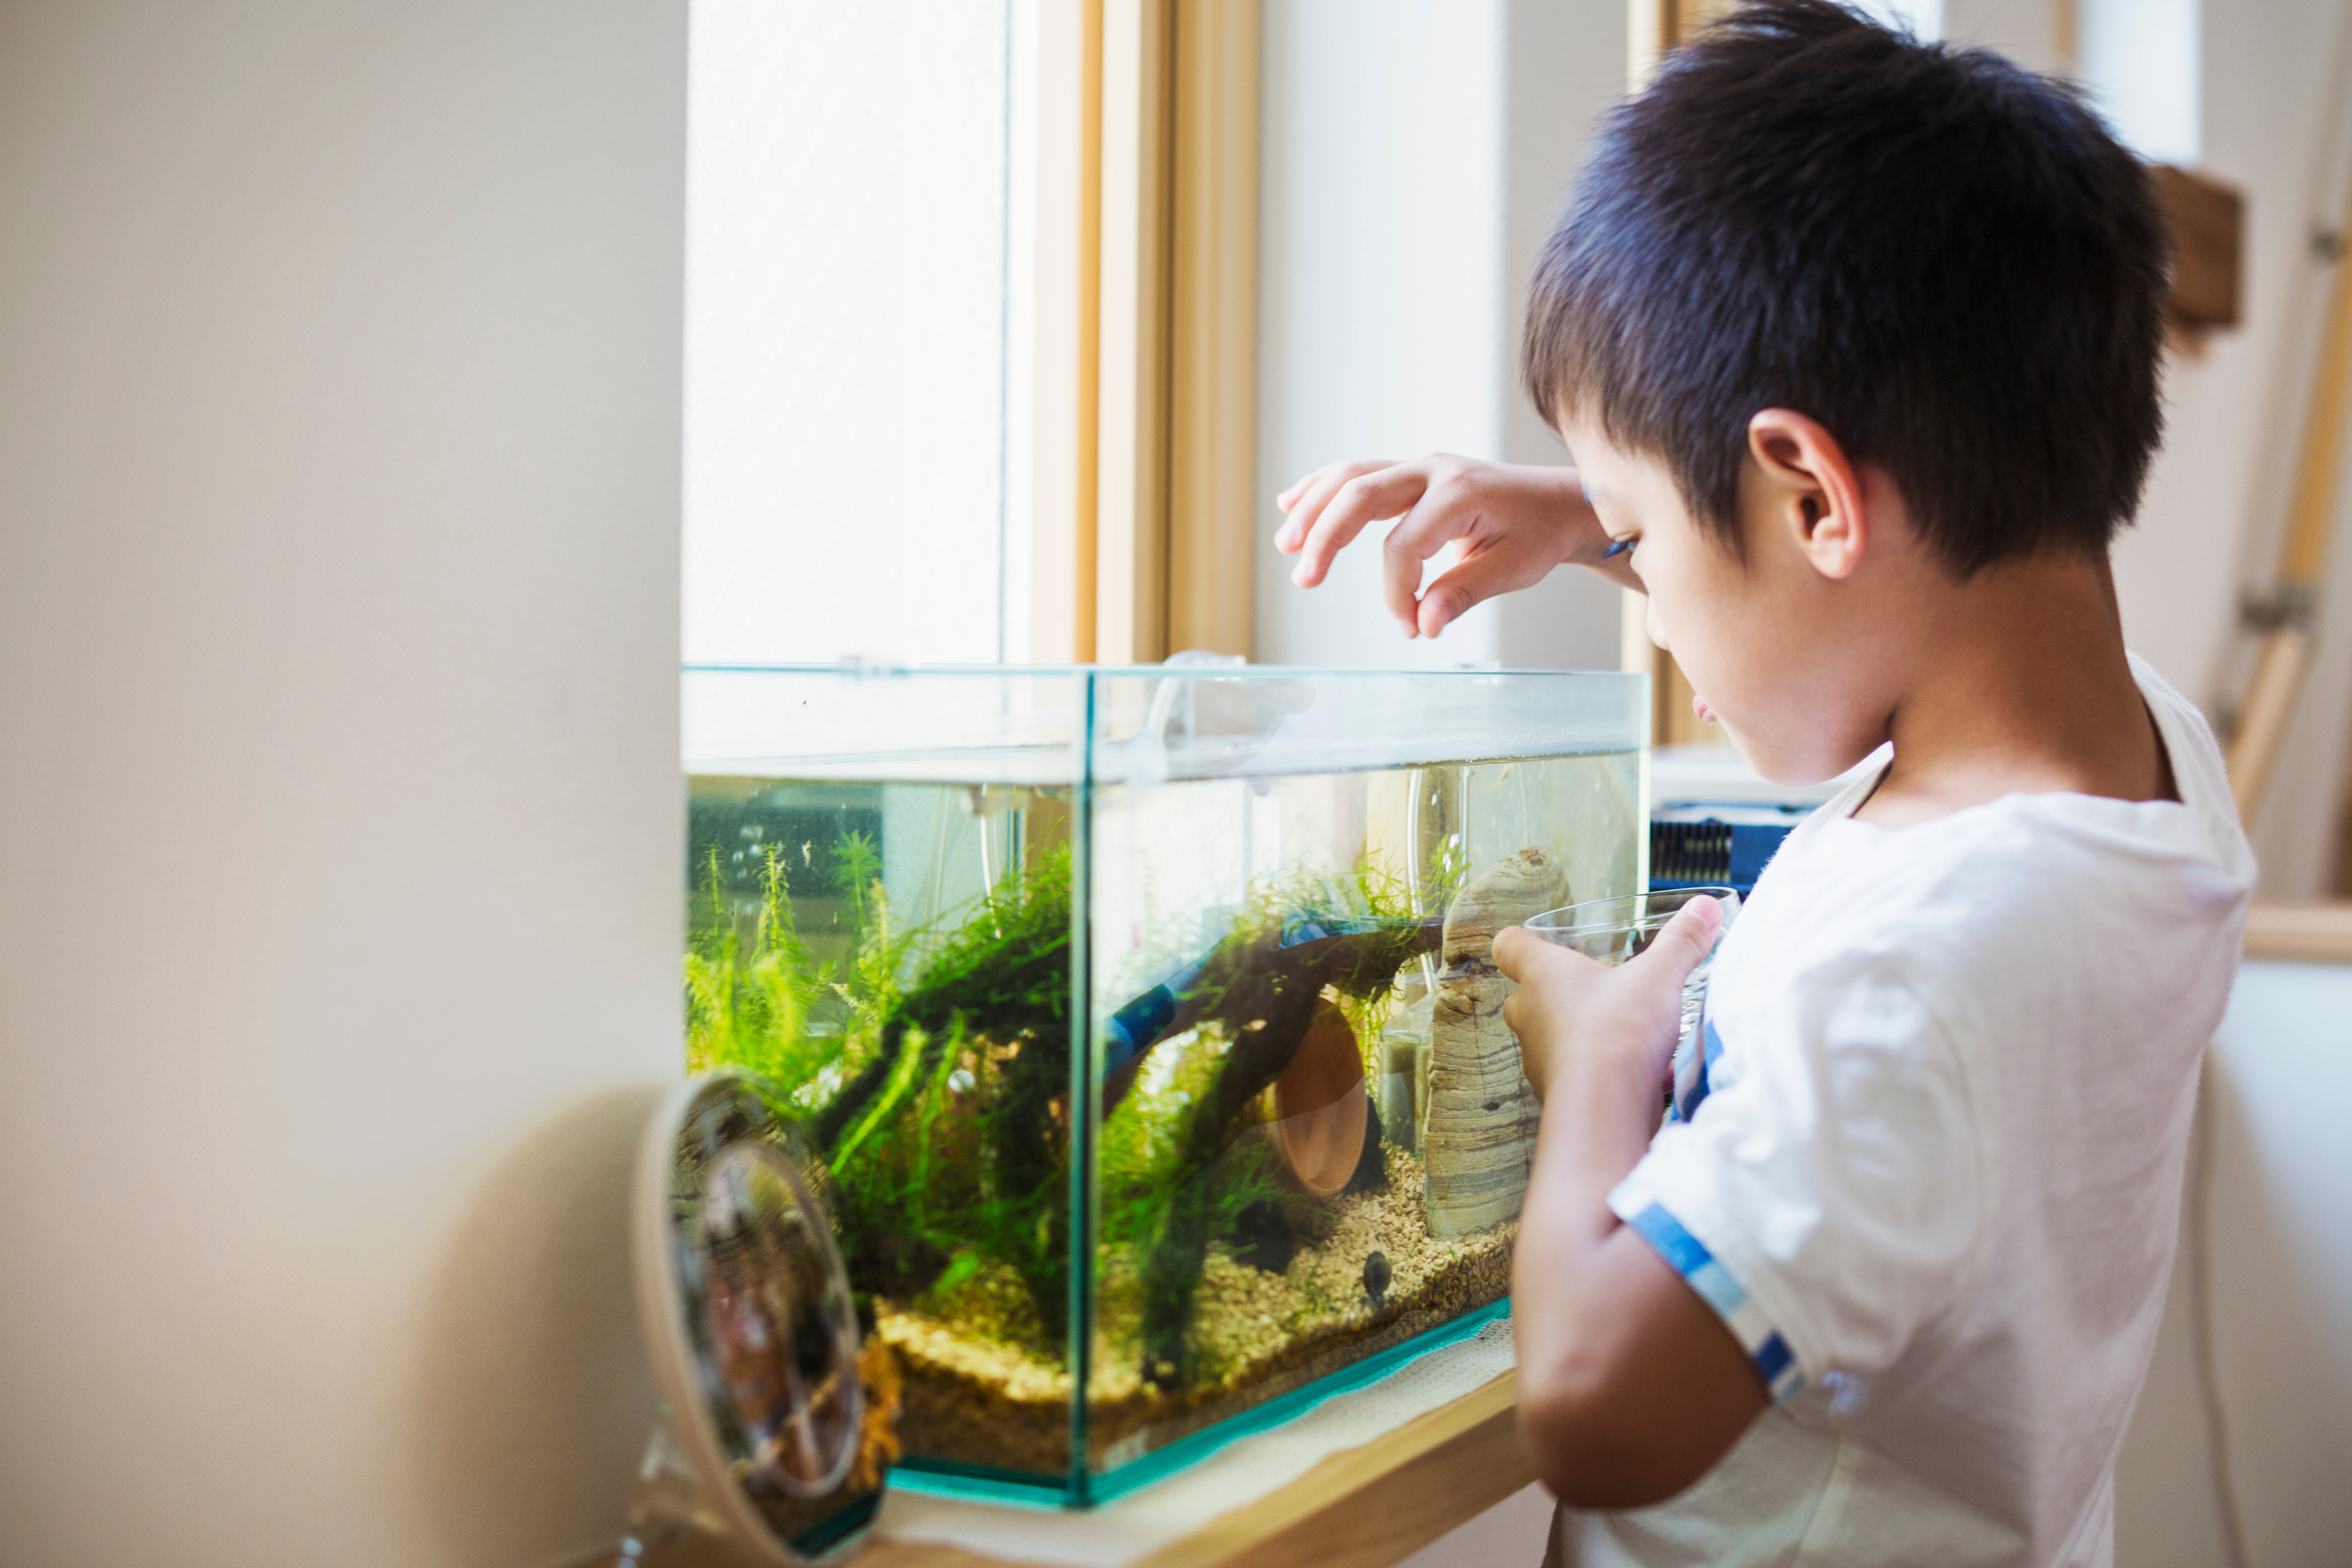 Freshwater Aquarium Fish Tank Common Disease and Treatment to have healthy fish tank | Splashy Fish